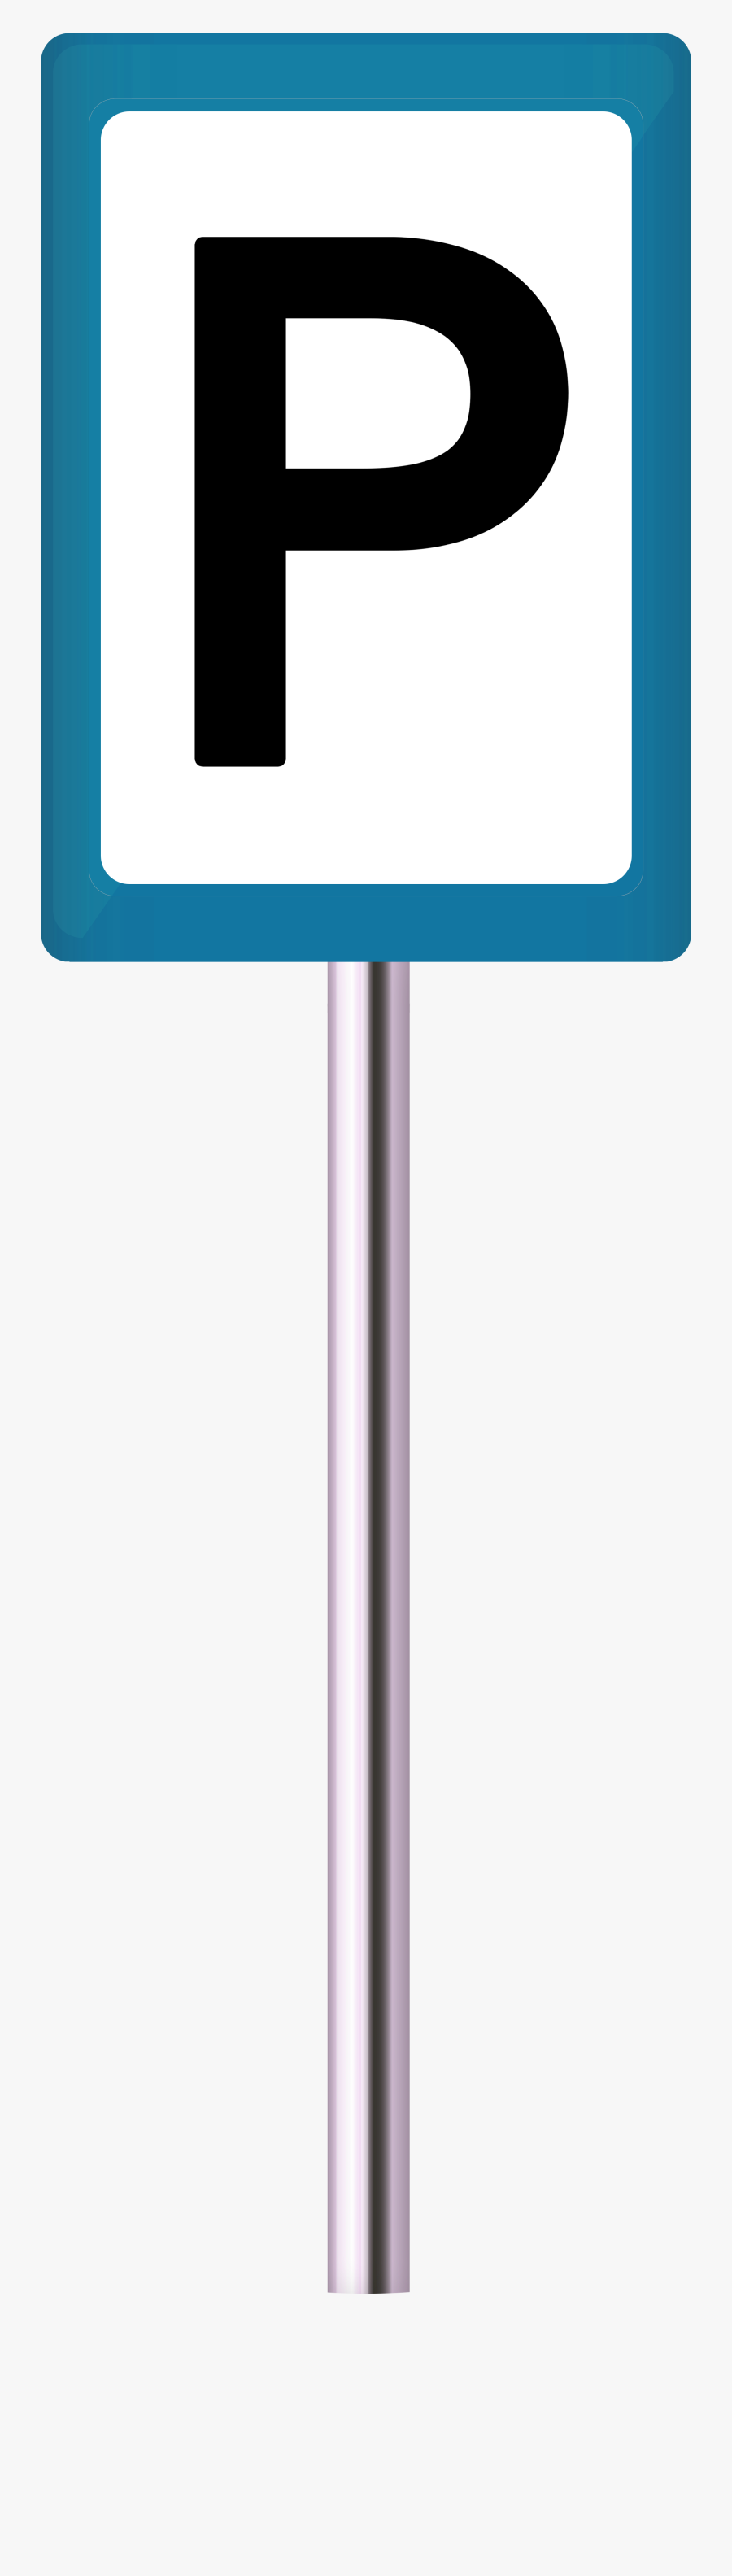 Parking Sign Png Clip Art - Parking Sign Clip Art Png, Transparent Clipart